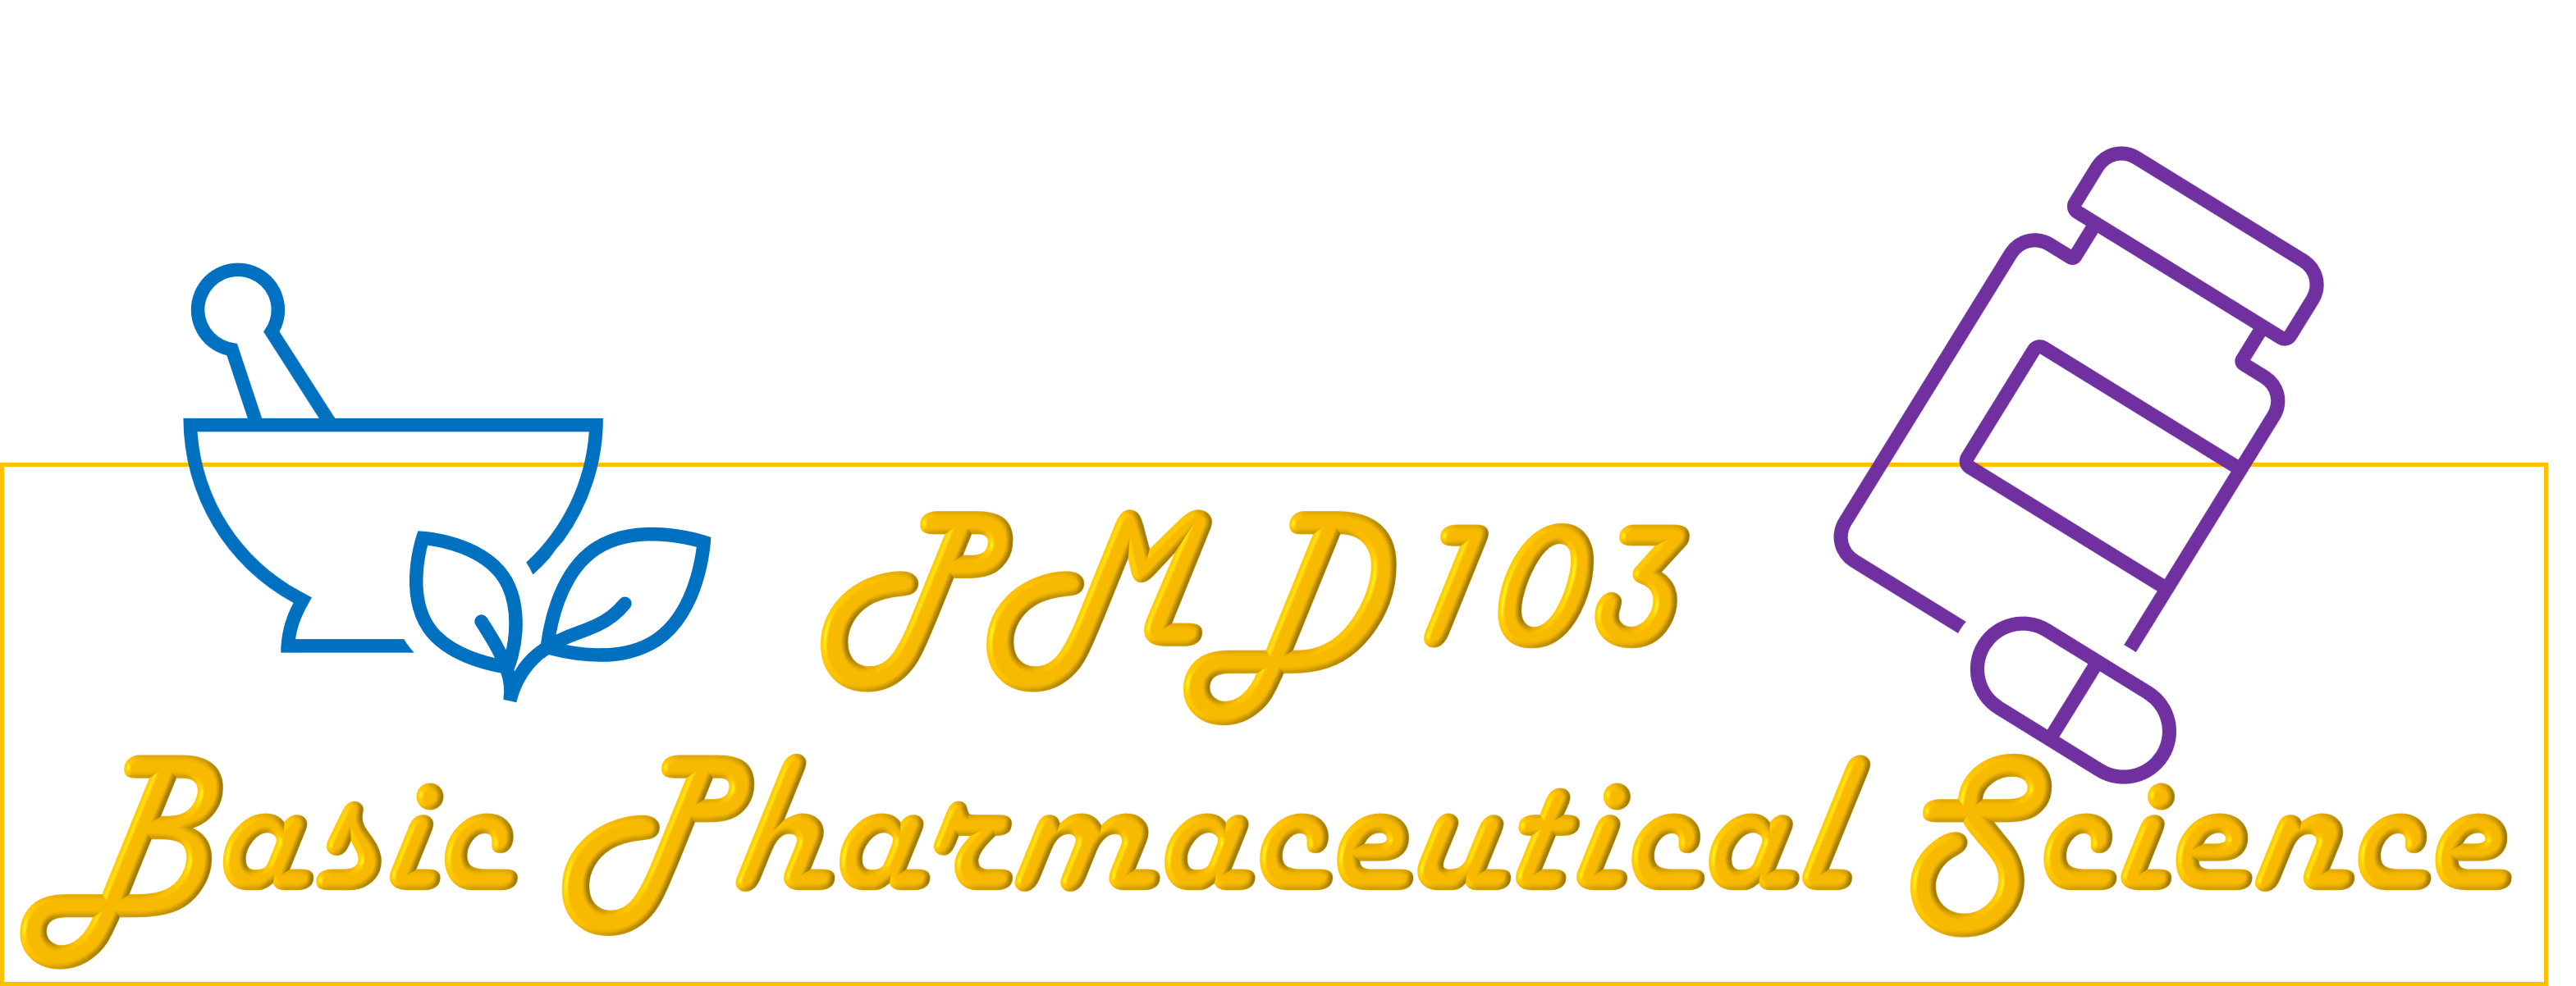 PMD103 Basic Pharmaceutical Science 2022